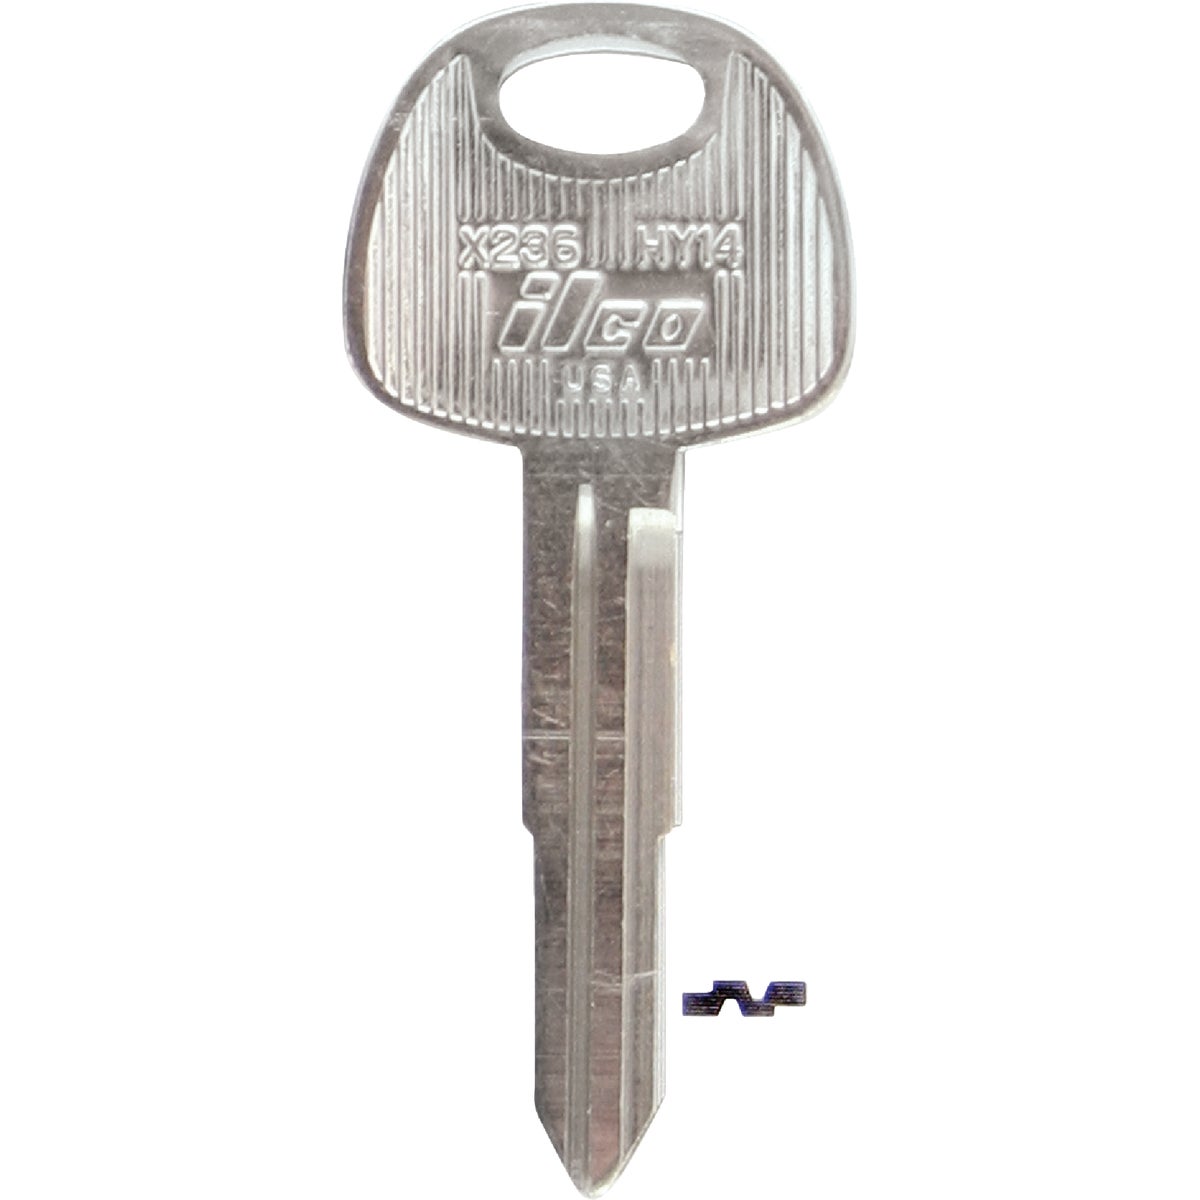 ILCO Hyundai Nickel Plated Automotive Key, HY14 / X236 (10-Pack)